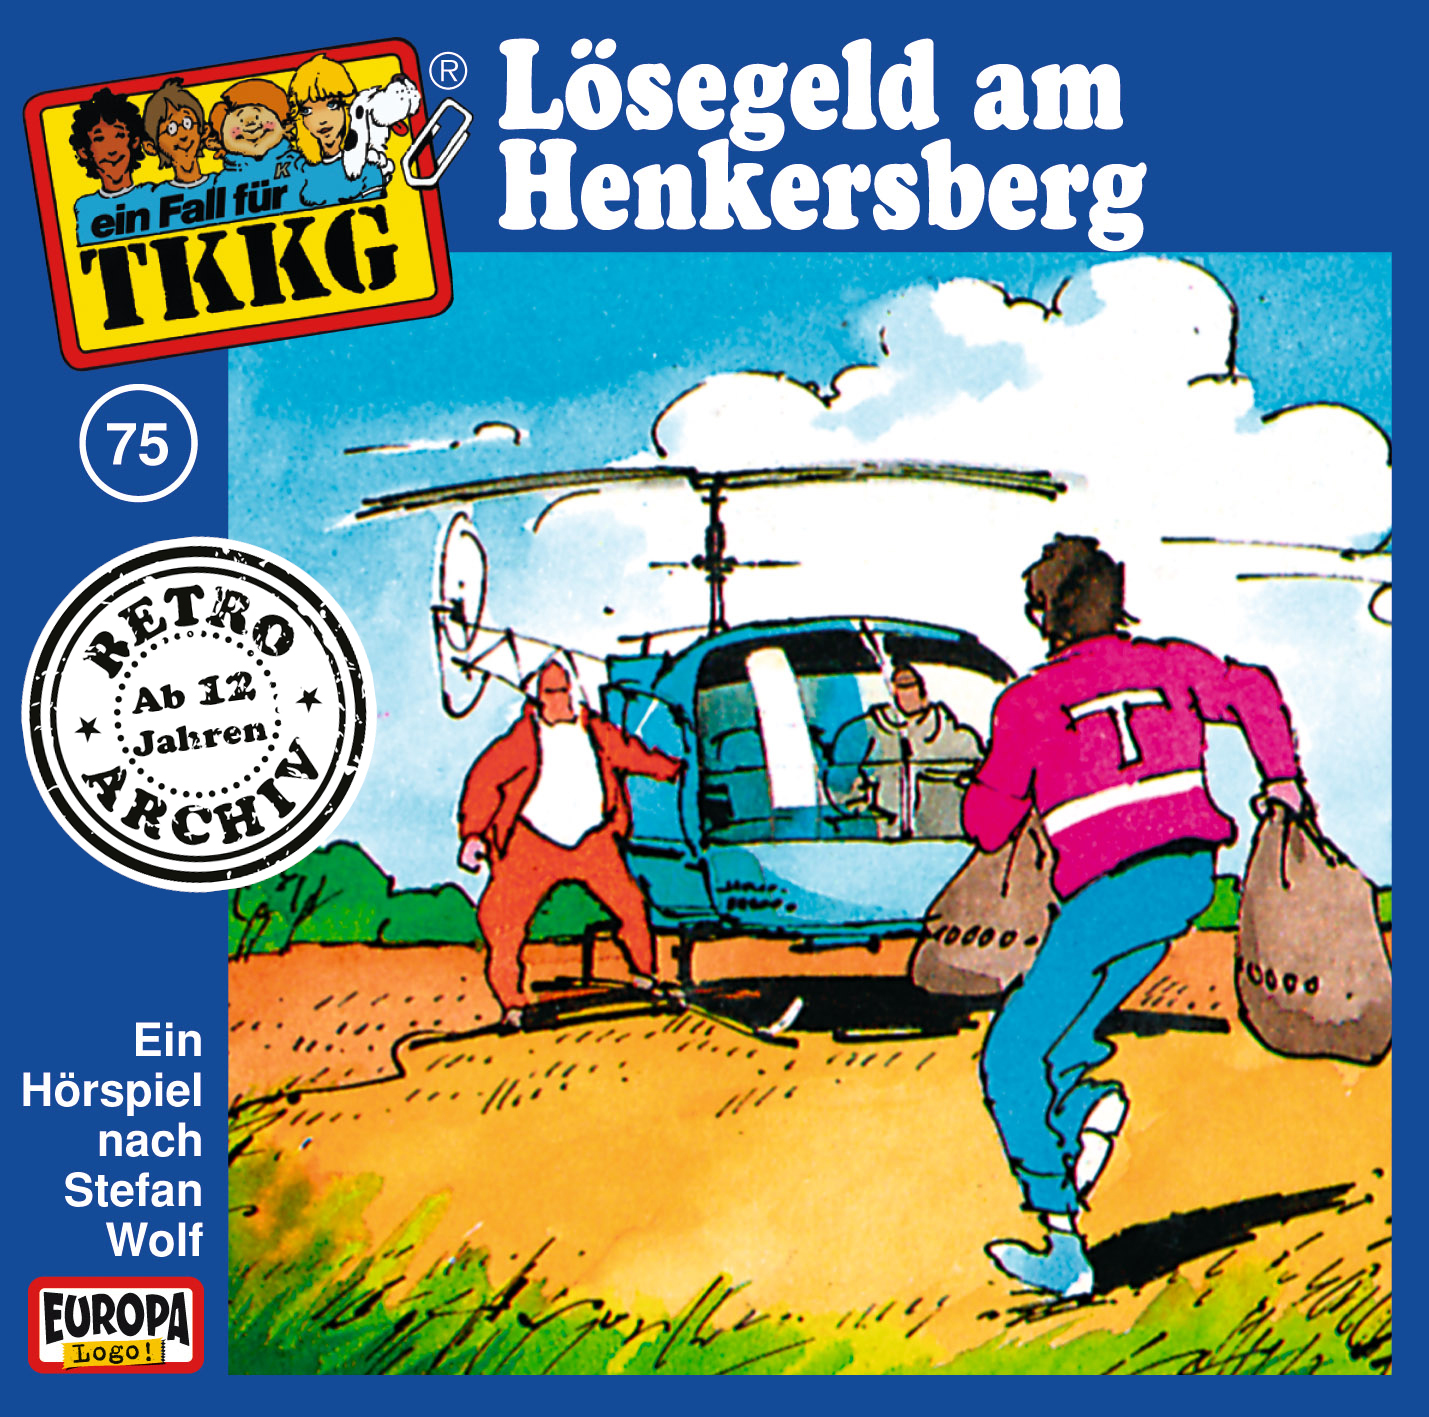 TKKG Retro-Archiv: Lösegeld am Henkersberg